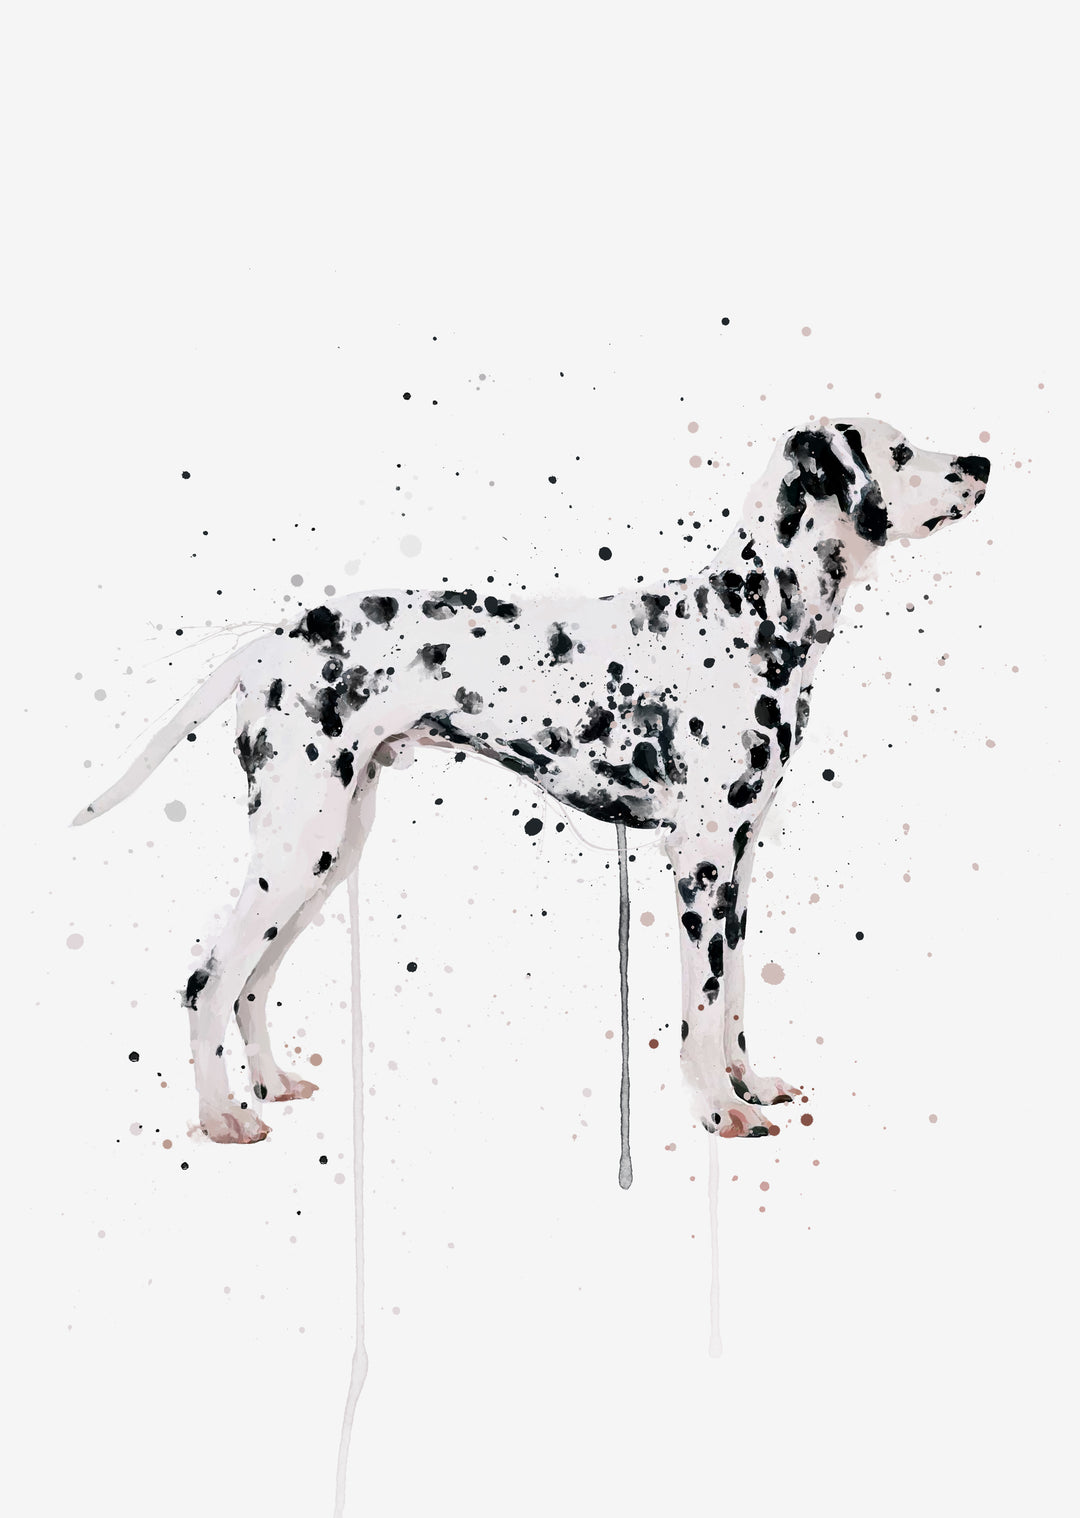 Dalmatian Dog Wall Art Print